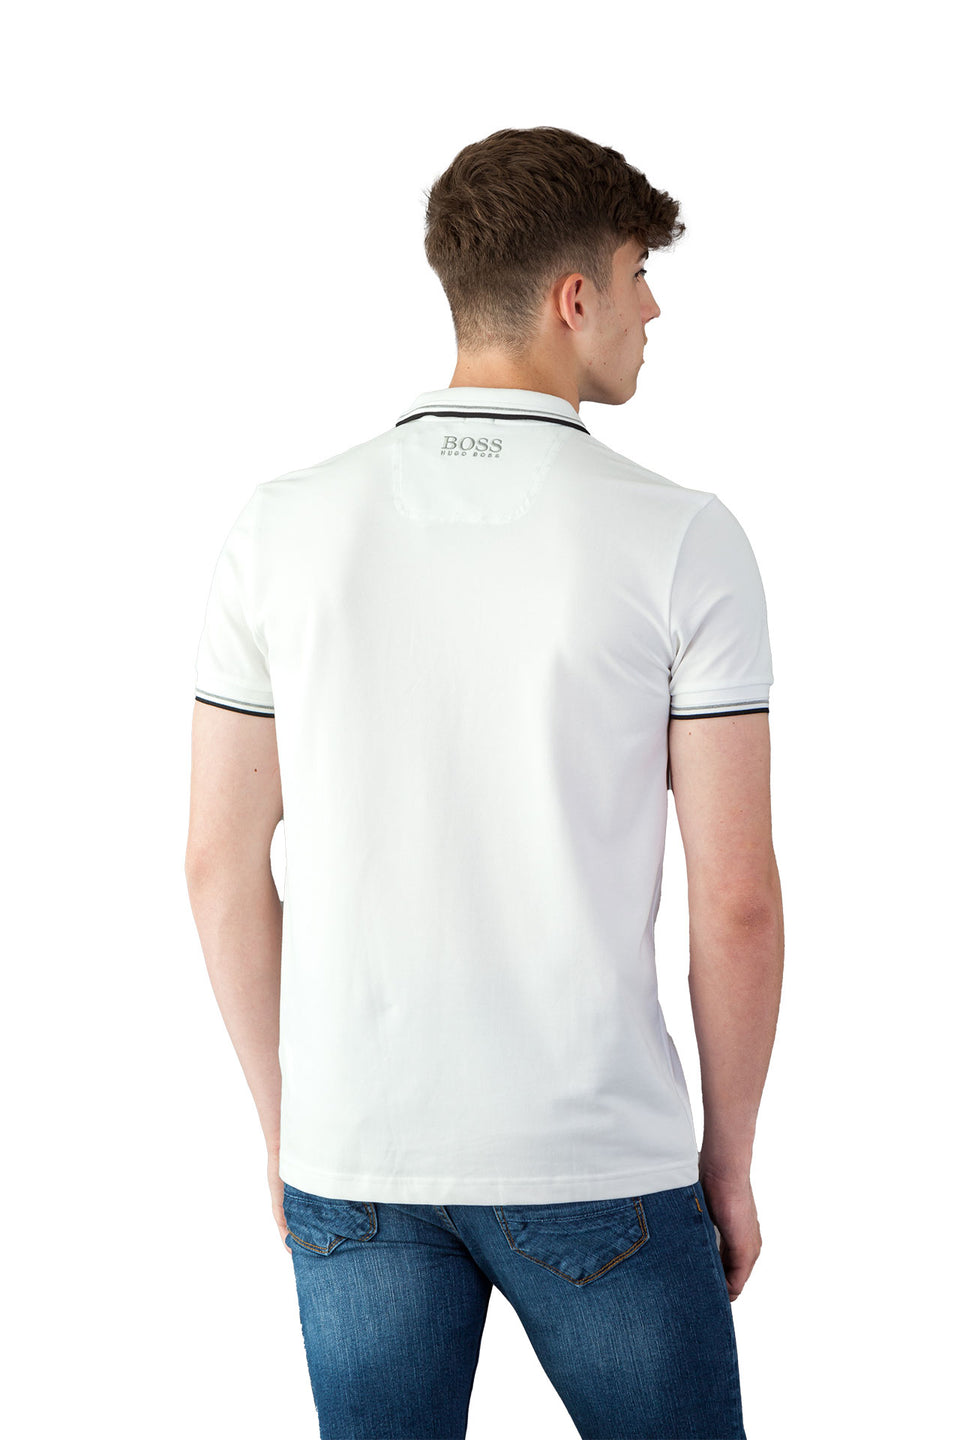 Hugo Boss Moisture Manager White Cotton Polo Shirt - Camden Connaught